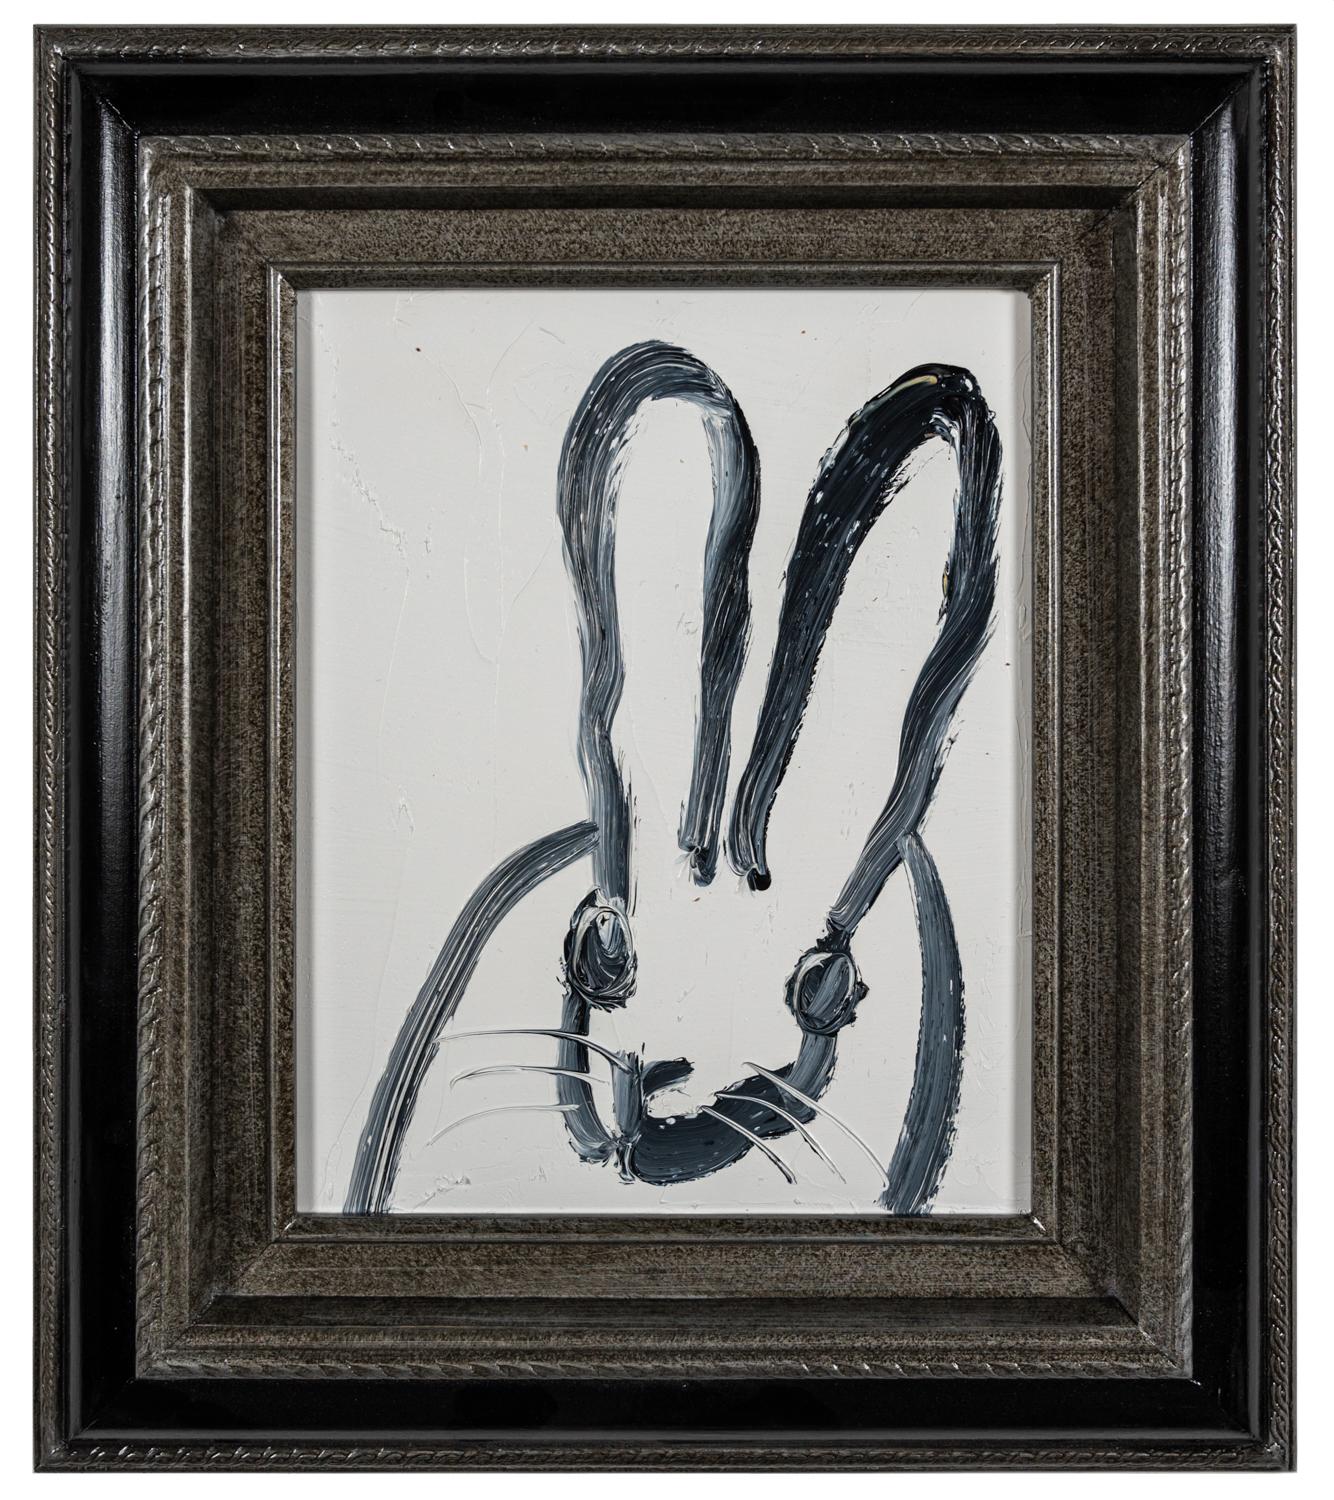 Hunt Slonem "Max" White Bunny Black Outline